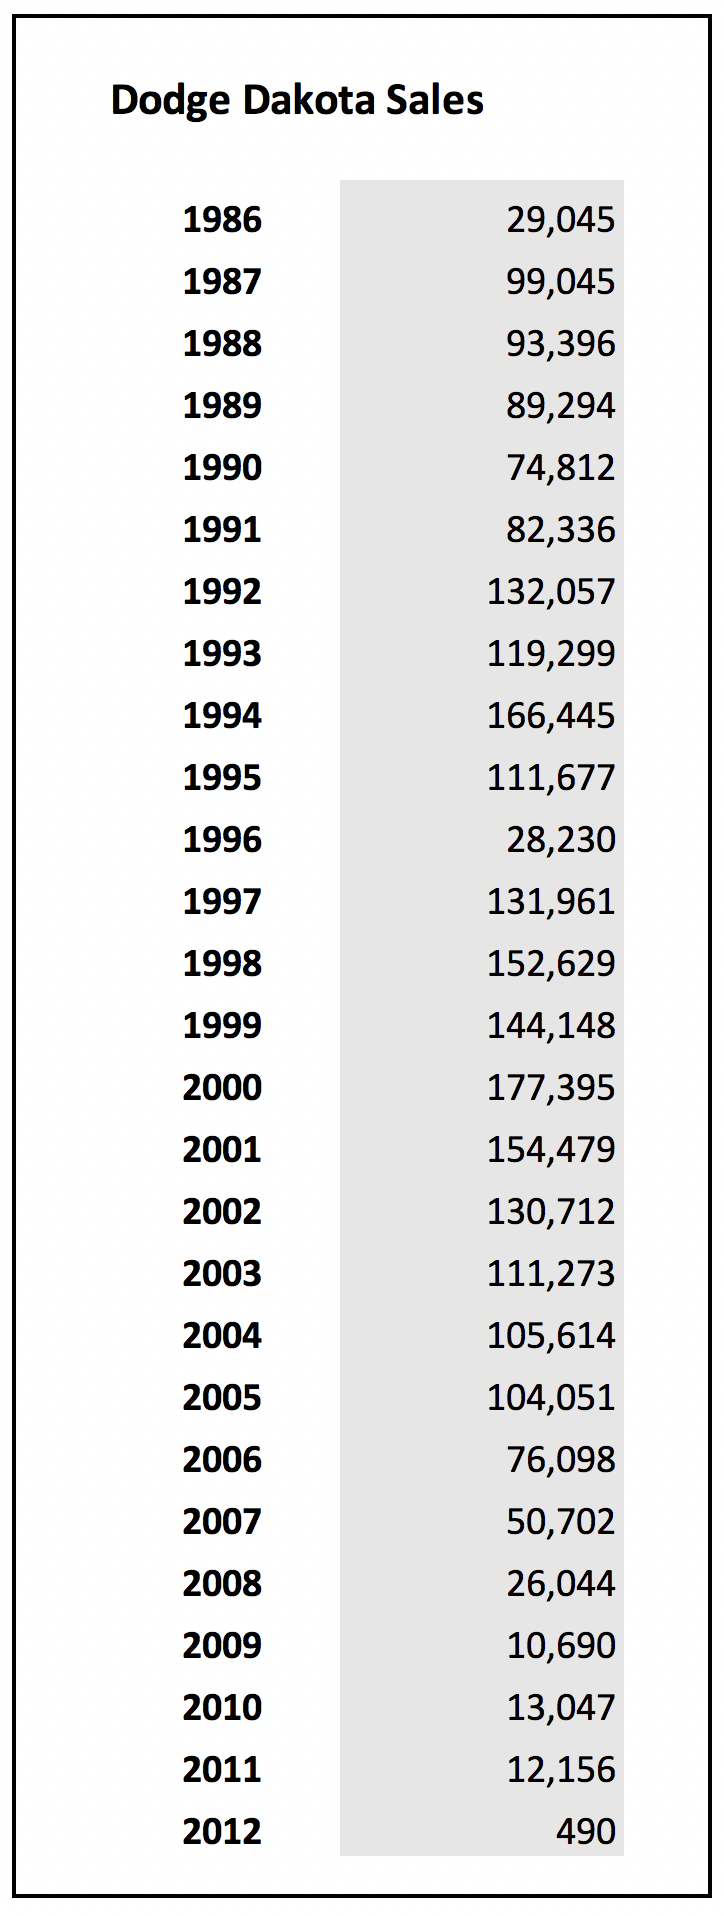 Dodge Dakota Sales, by Year 